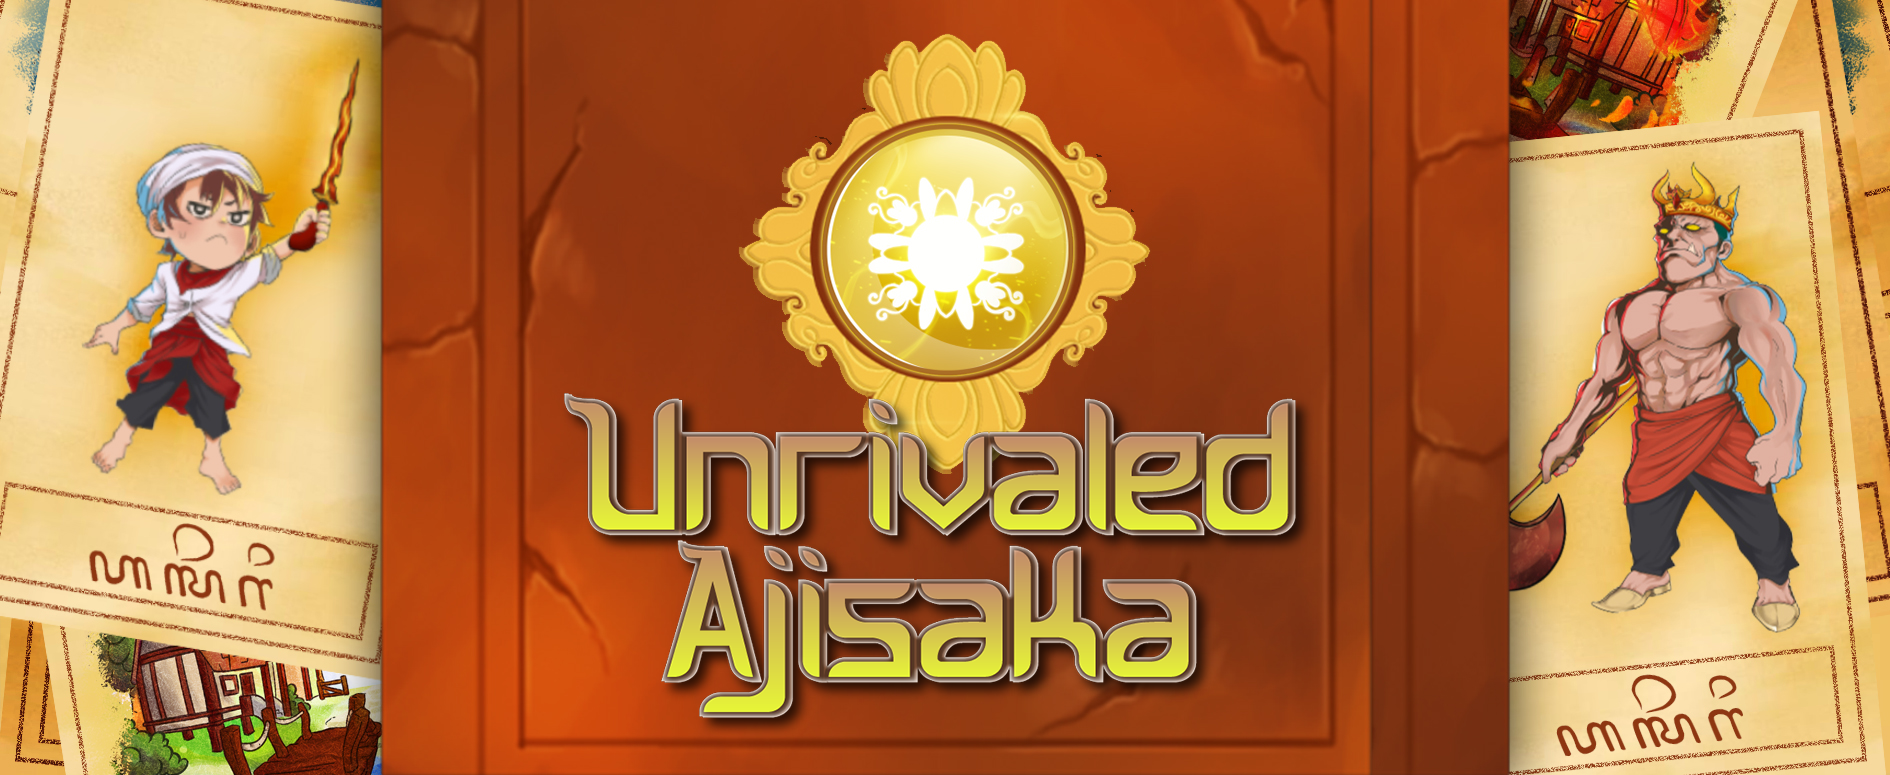 Unrivaled AjiSaka